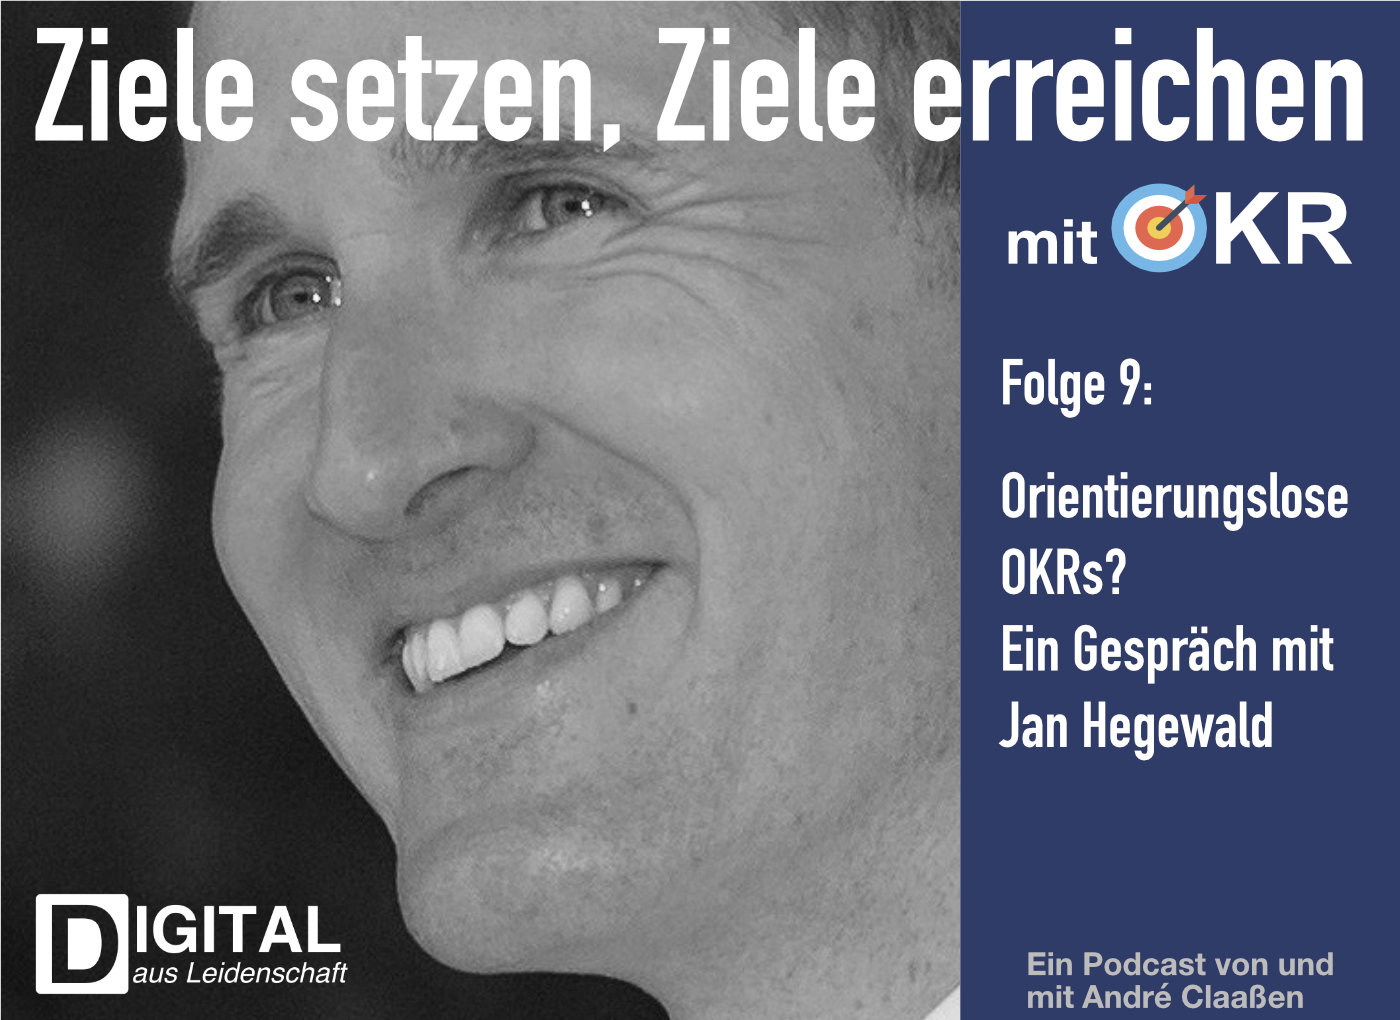 podcast/okr/okr-podcast-episode-9-orientierungslose-okrs-mit-jan-hegewald/okr-podcast-cover.jpg